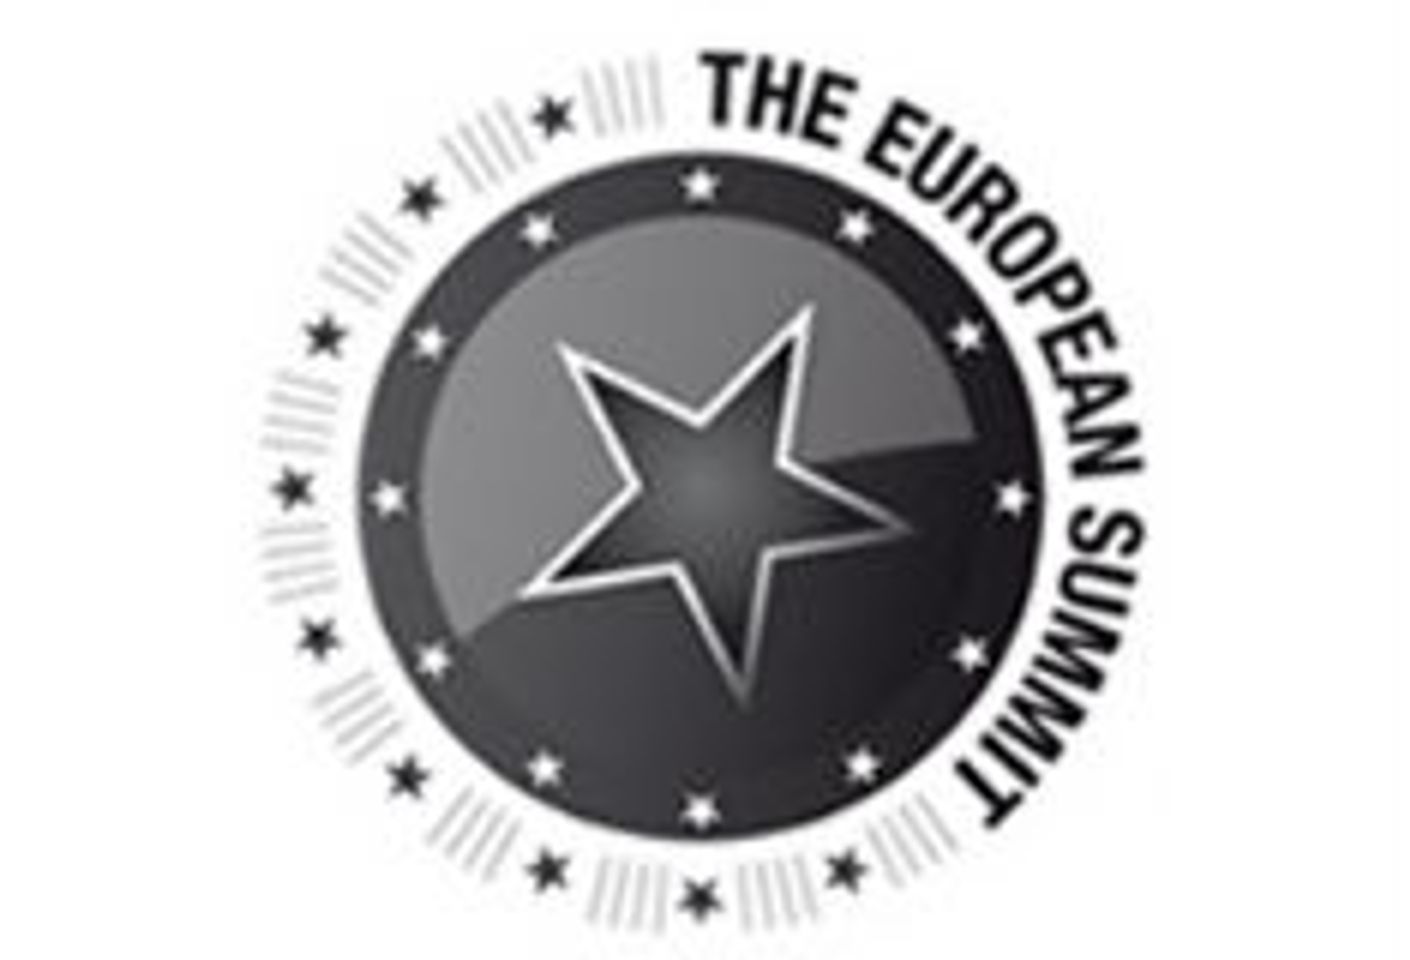 The European Summit 2015 Barcelona Officially Announced